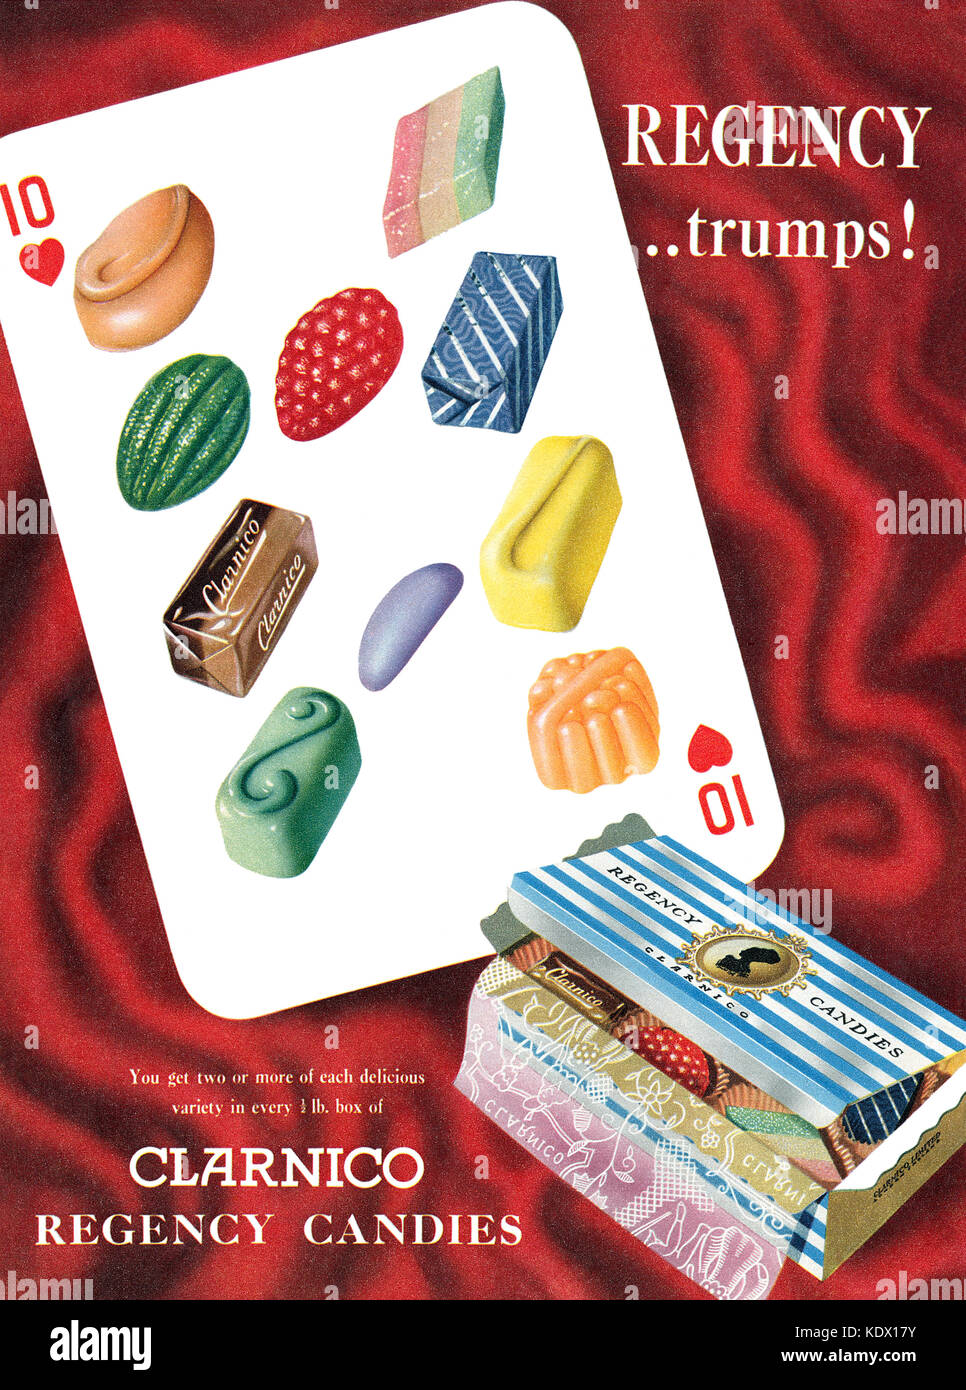 1955 British advertisement for Clarnico Regency Candies. Stock Photo